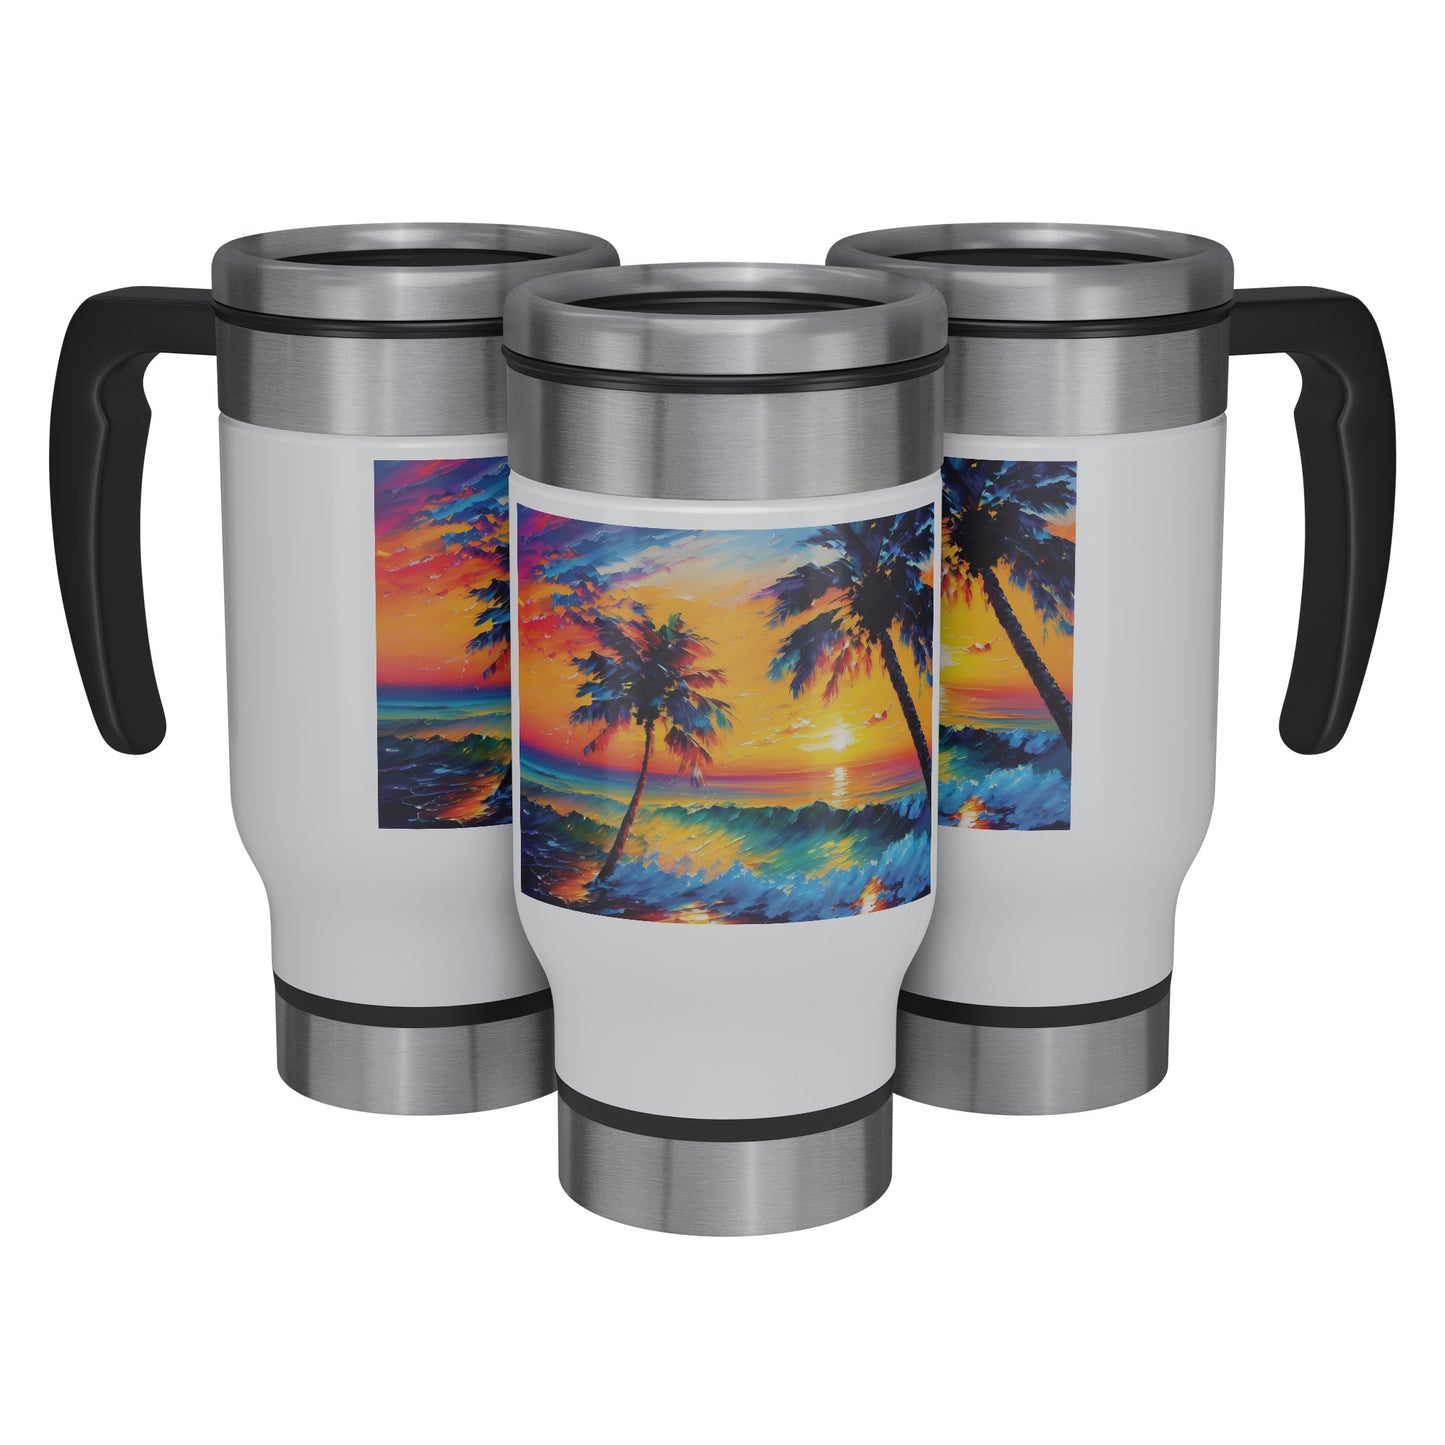 Tropical Island Beach - 14oz Travel Mug #2